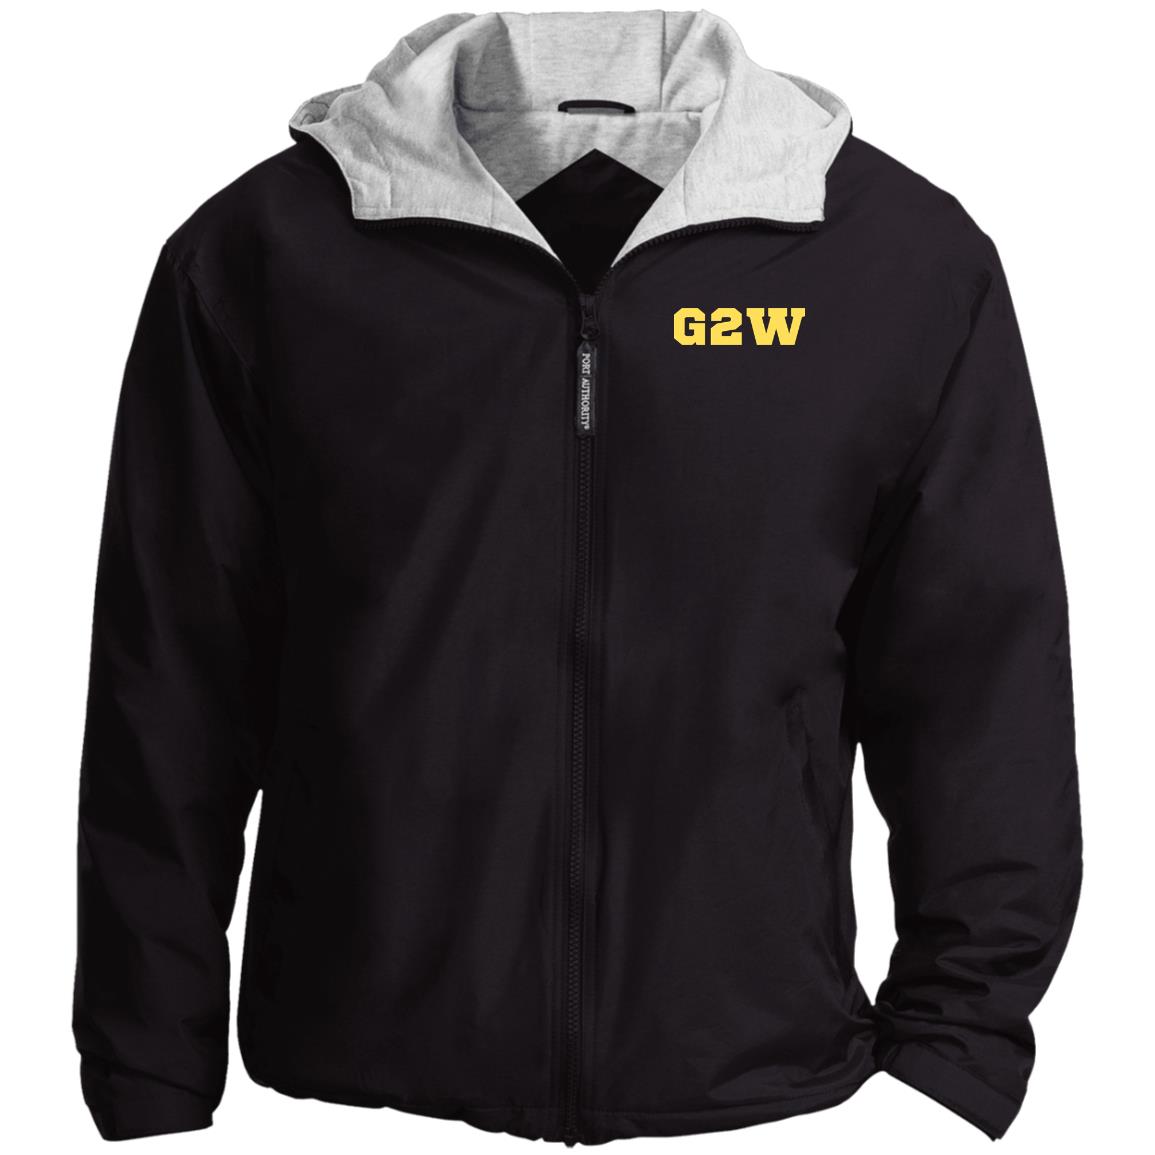 G2W Yellow Team Jacket